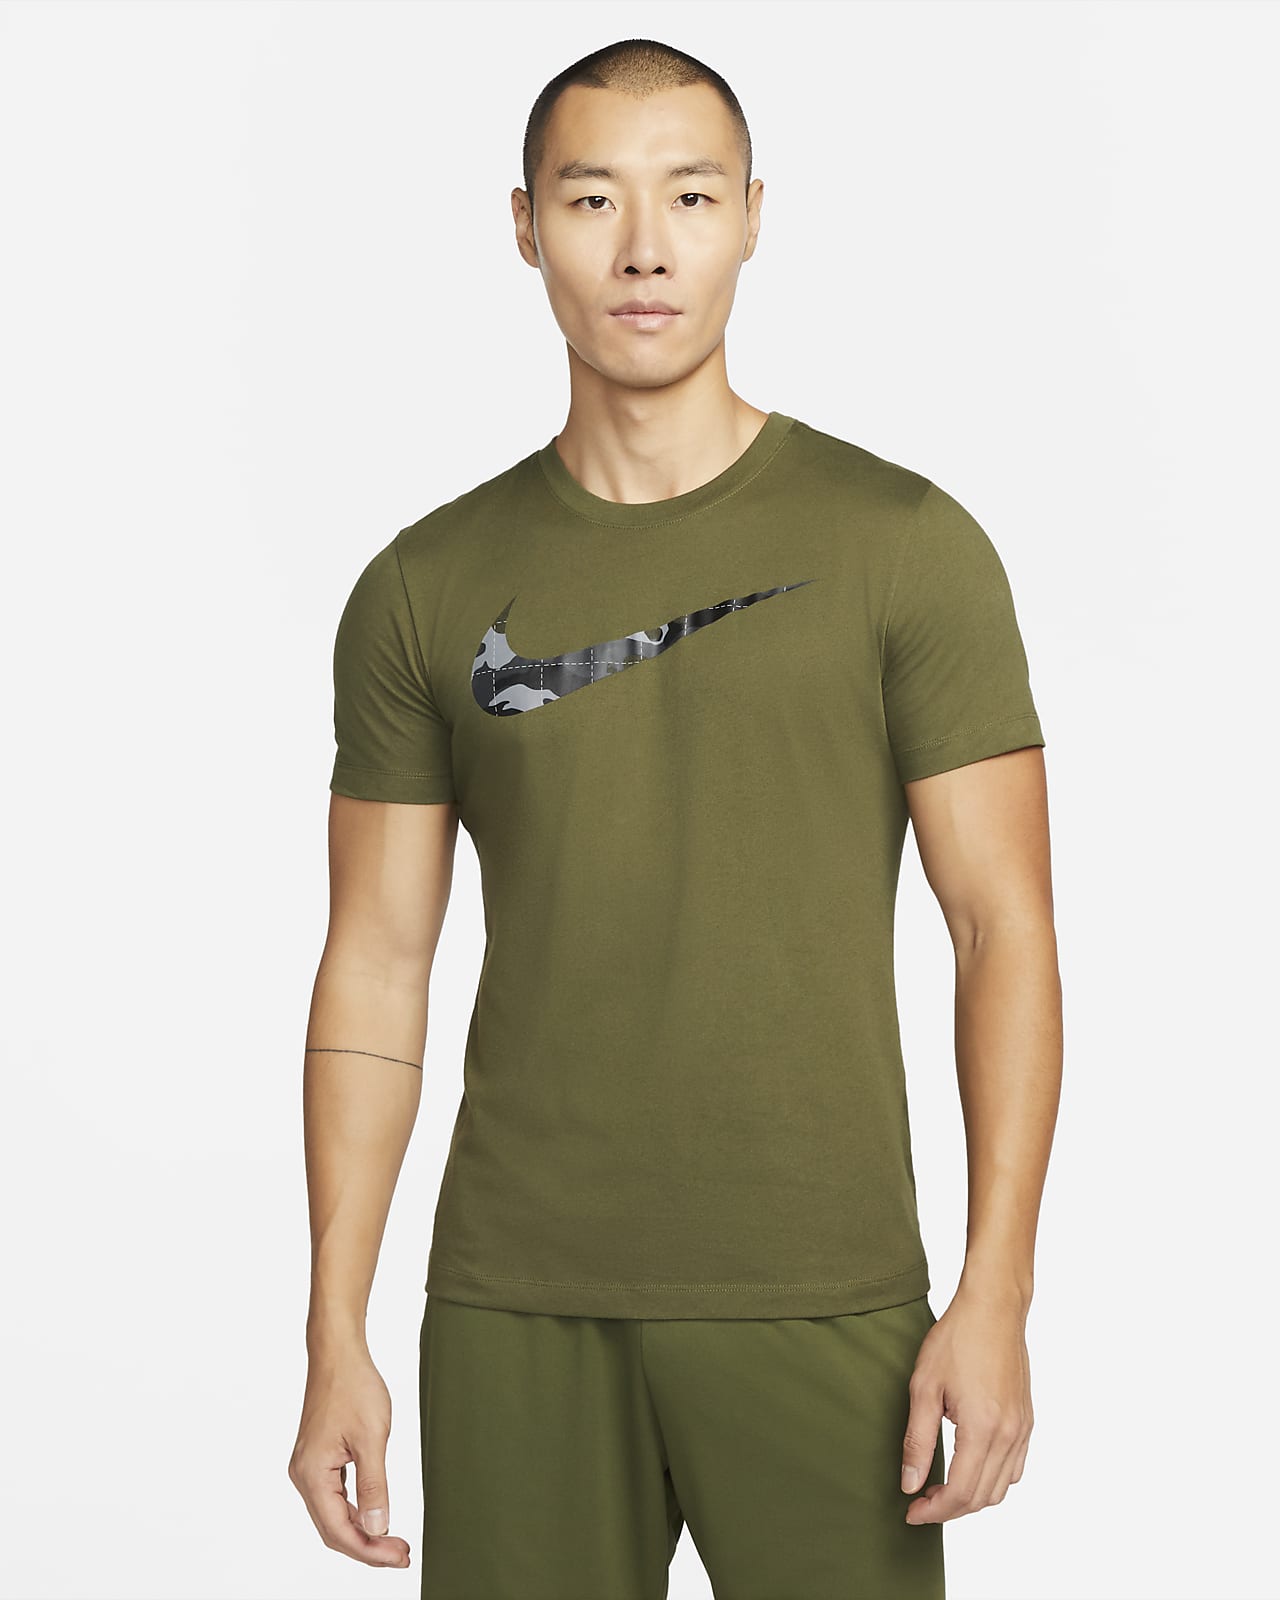 Buy Nike Men's Dri-FIT Yoga Training T-Shirt Black in KSA -SSS